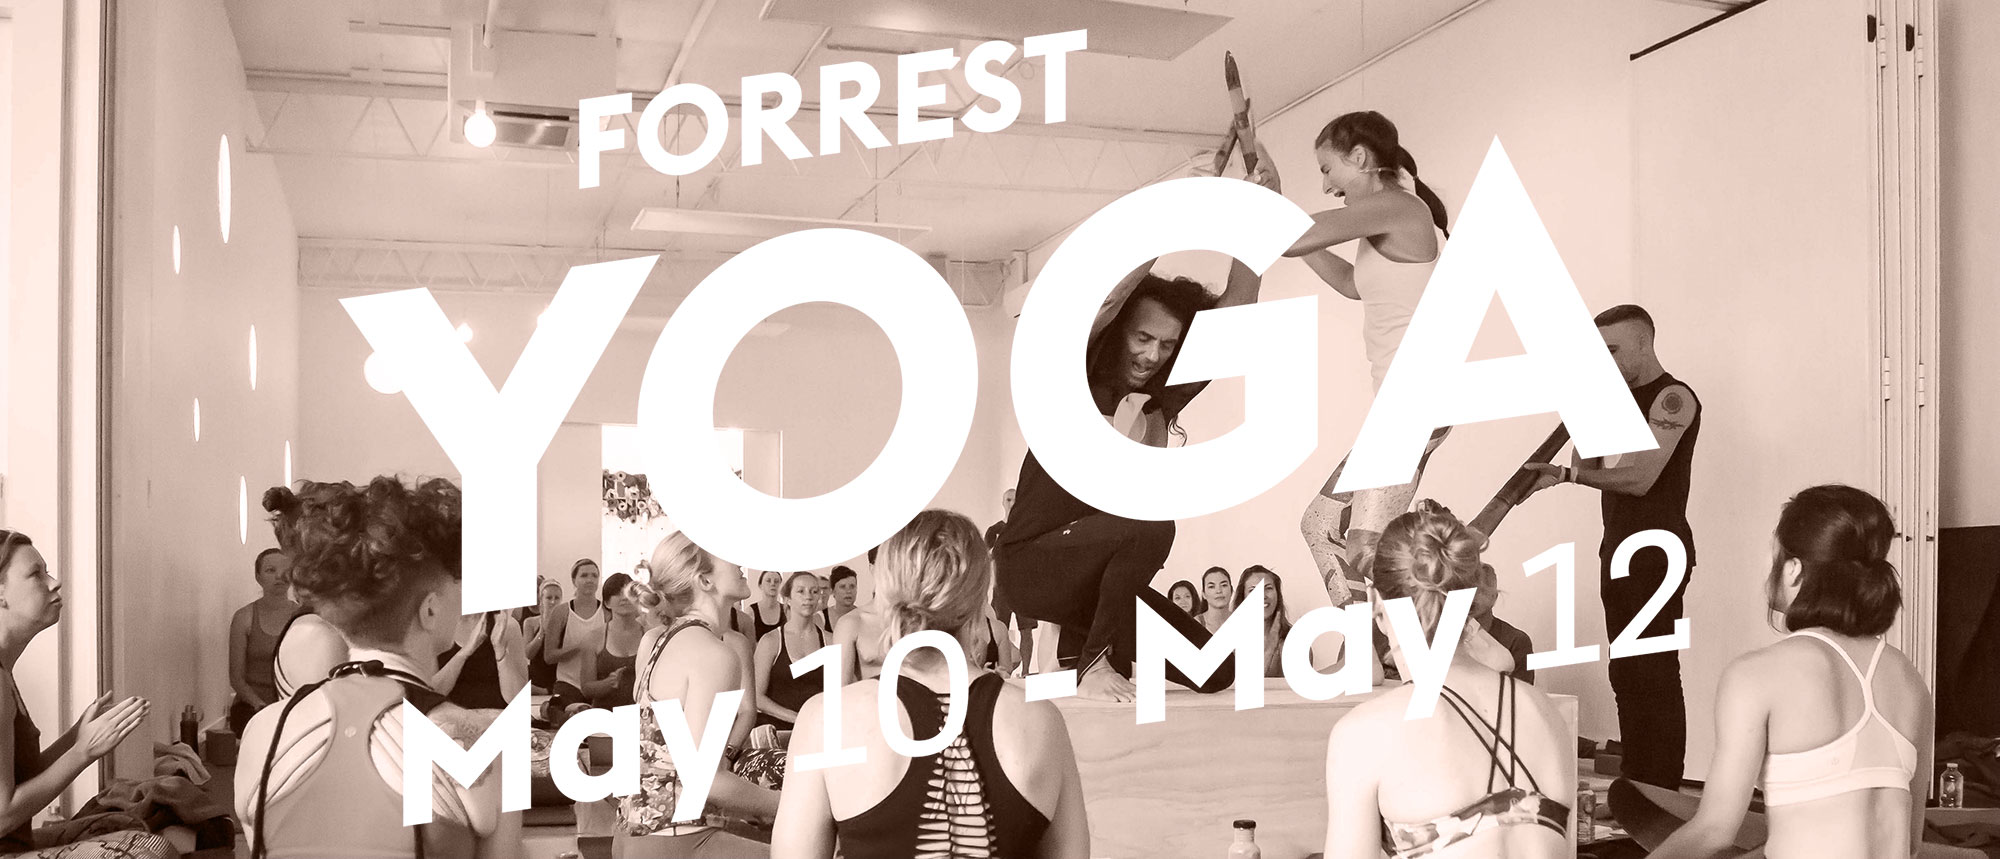 Ana T. Forrest - Forrest Yoga